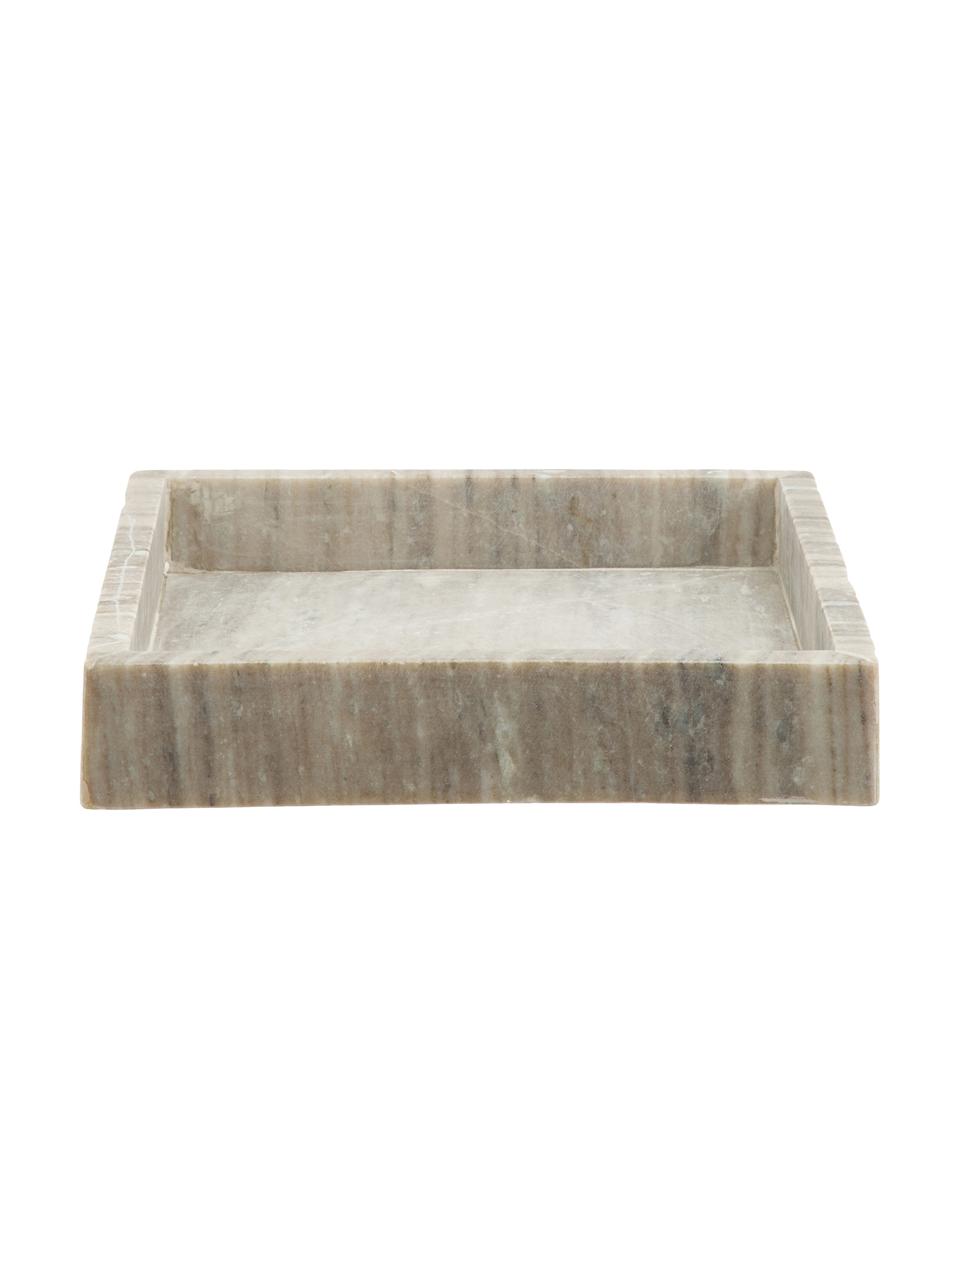 Marmor-Tablett Porter, Marmor, Taupe, B 26 x T 26 cm